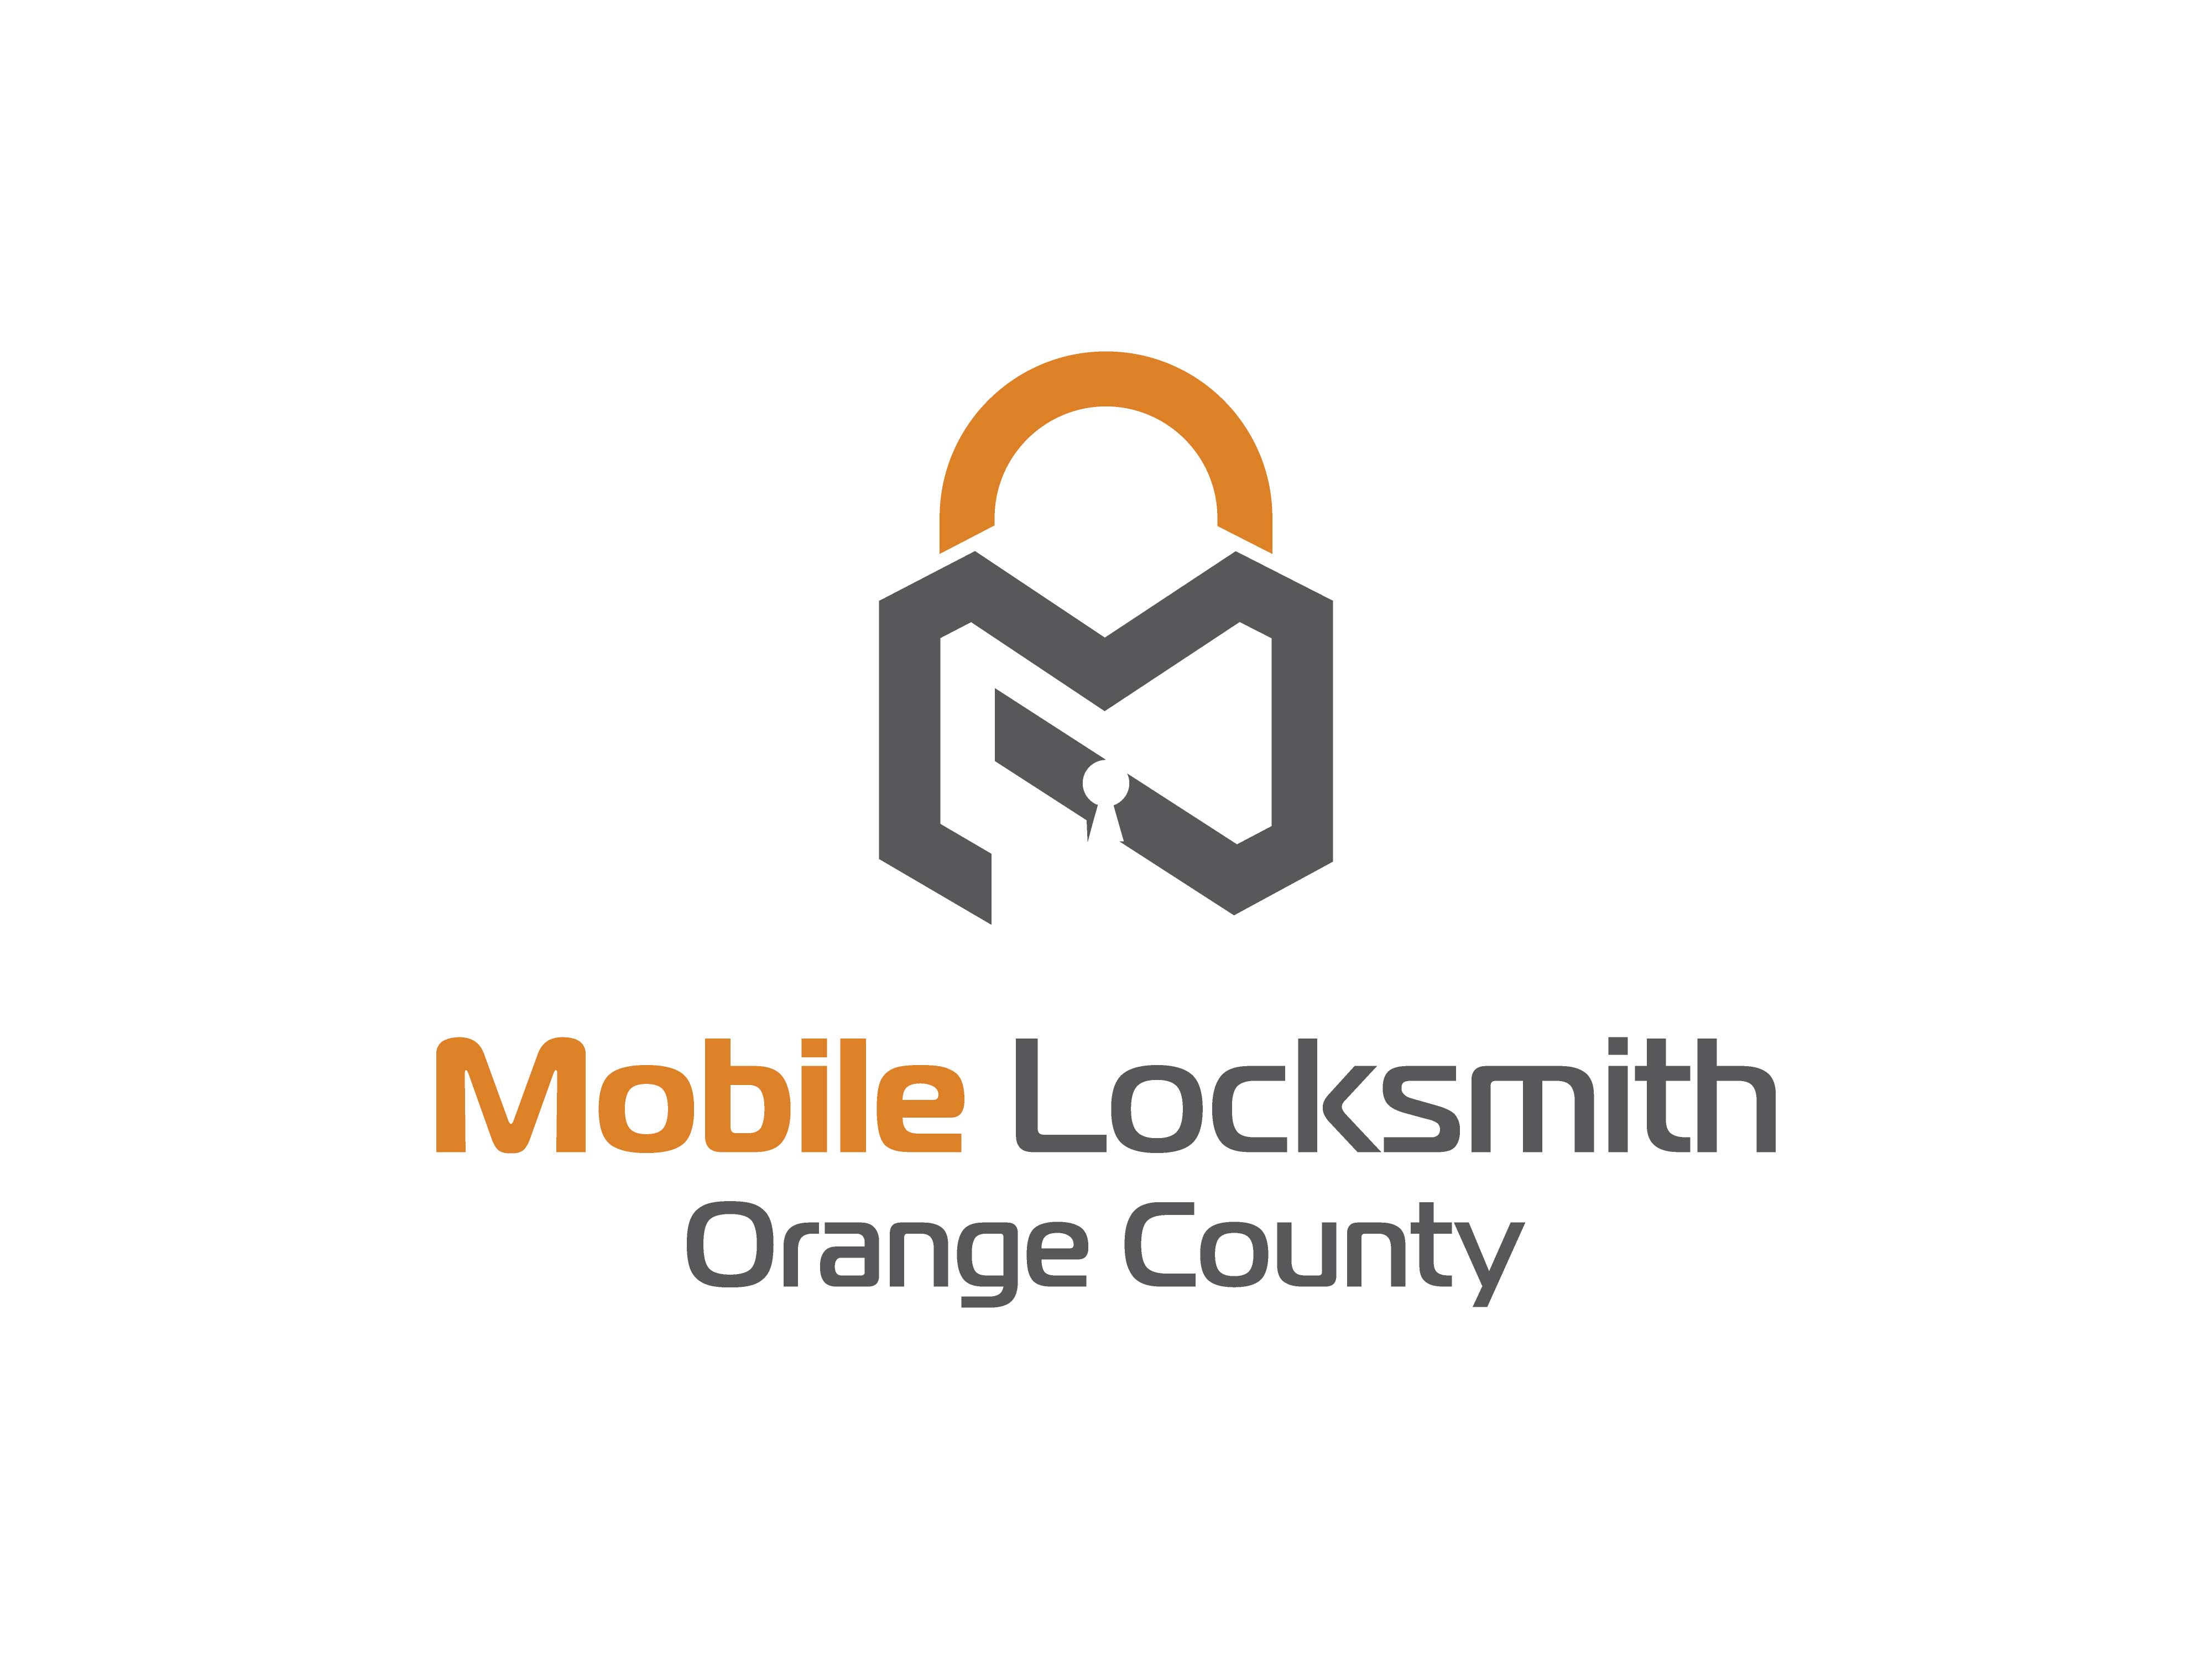 Mobile Locksmith Orange County